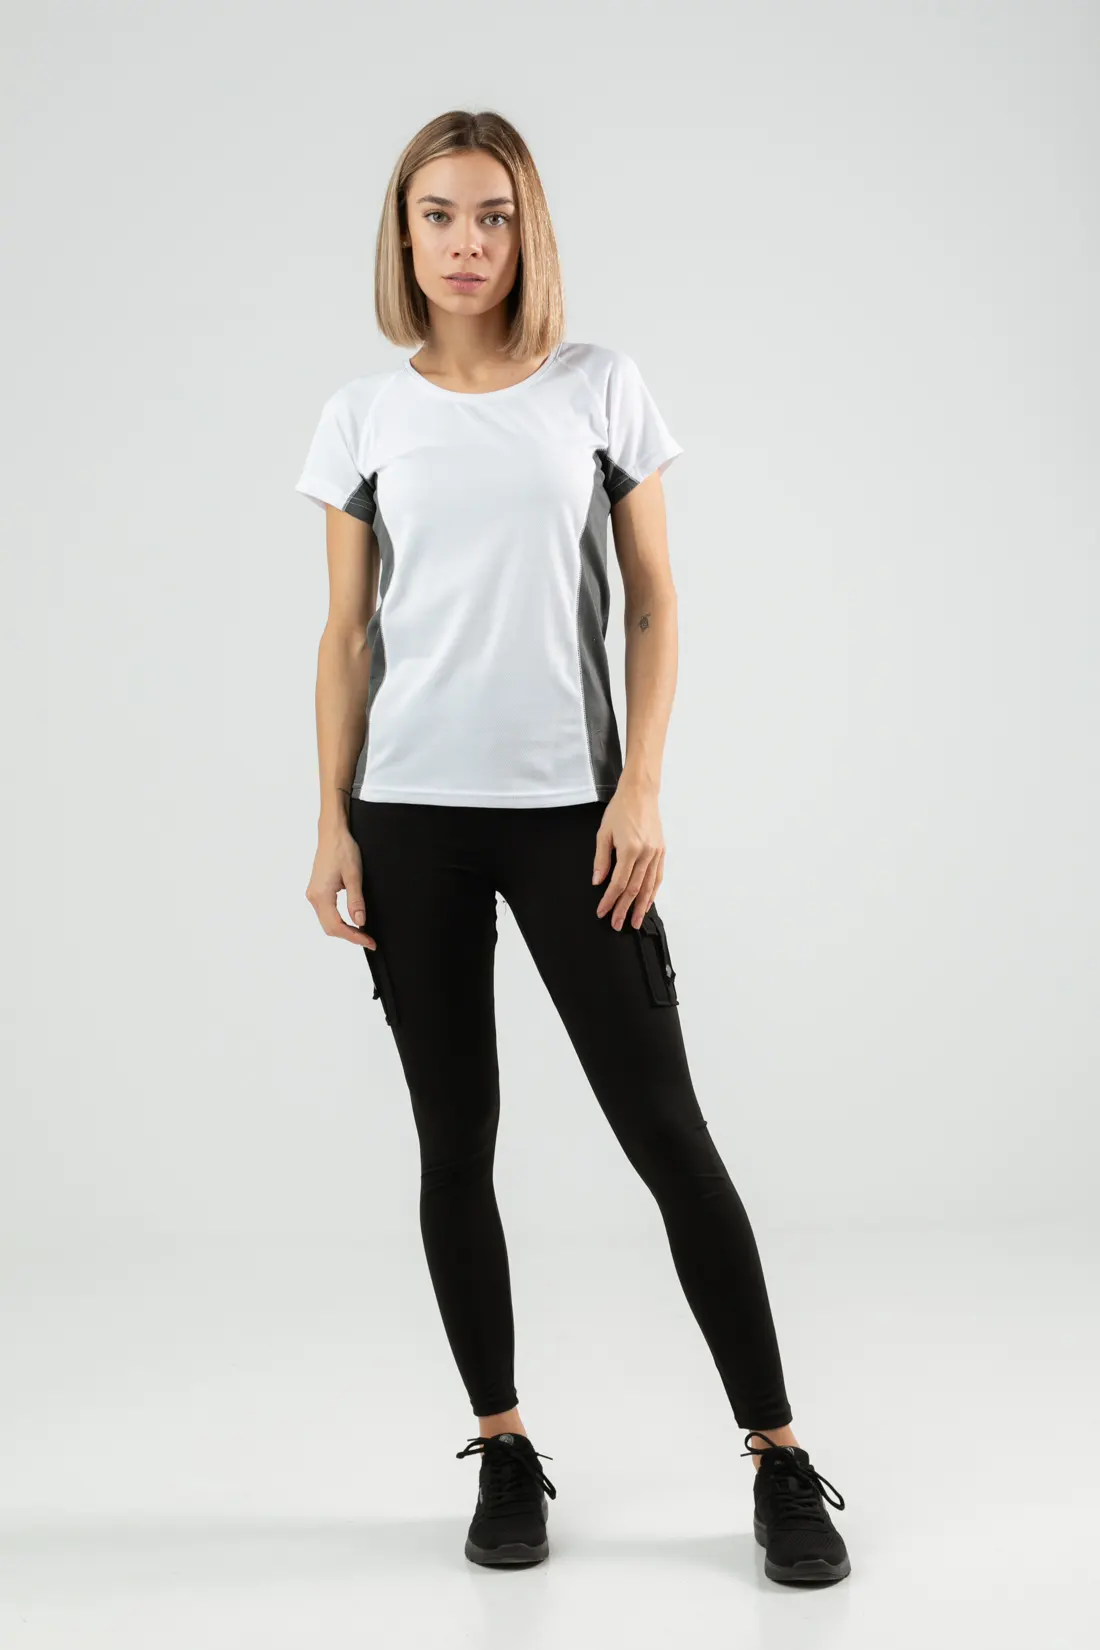 Camiseta Sanga - Branco/Cinza Oscuro